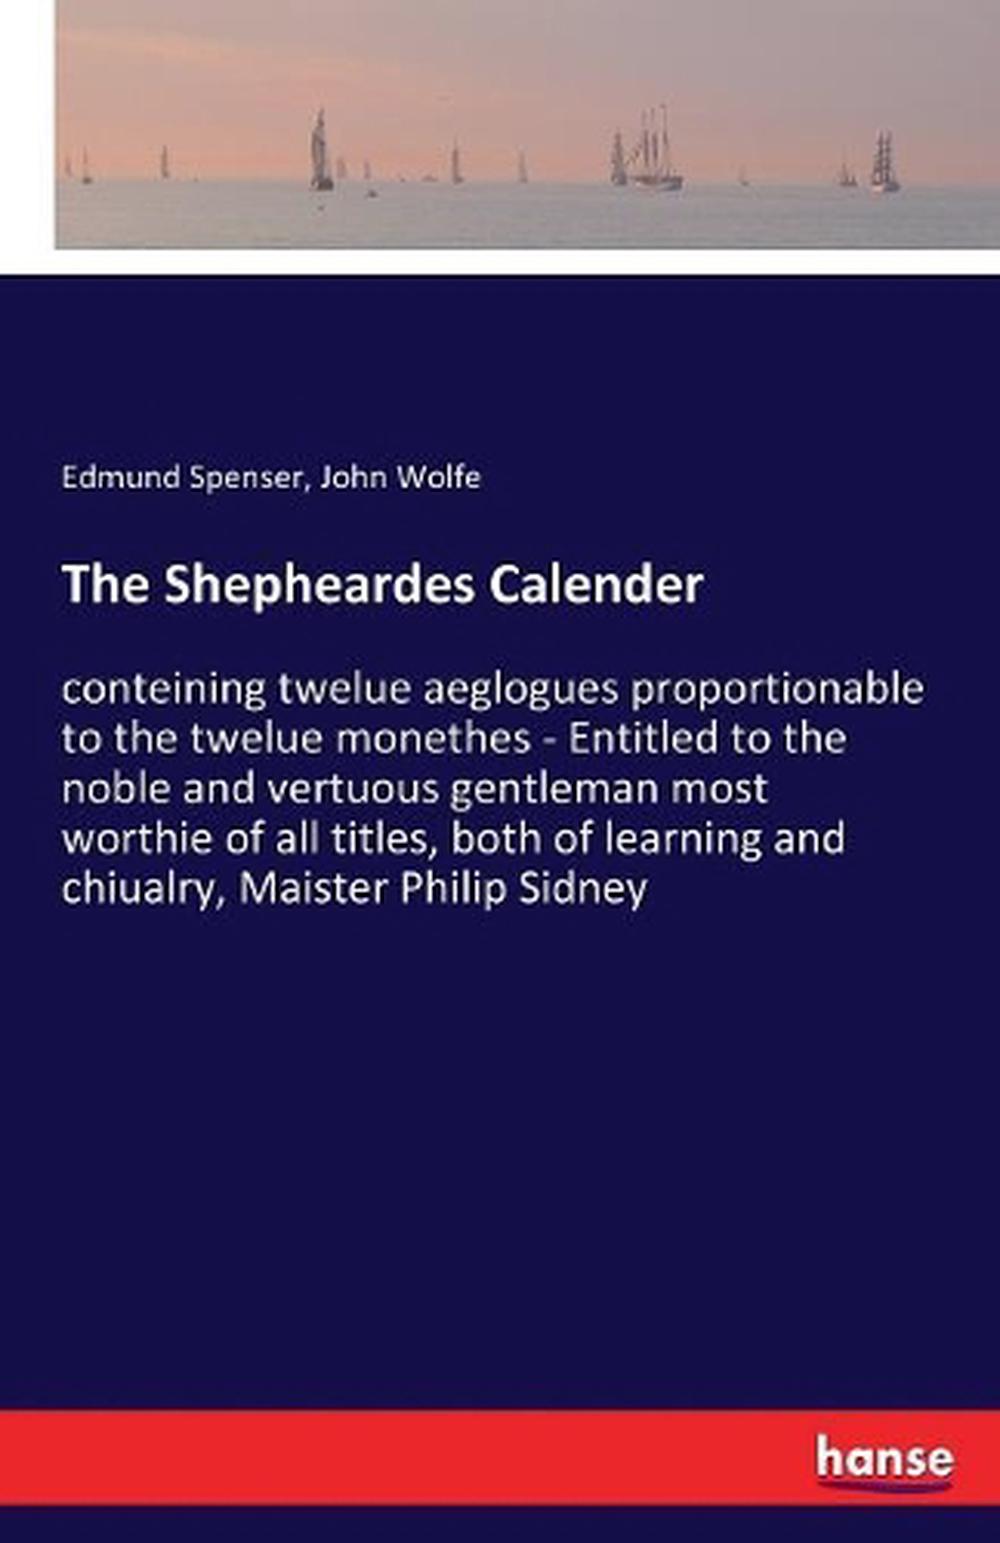 Shepheardes Calender by Edmund Spenser (English) Paperback Book Free